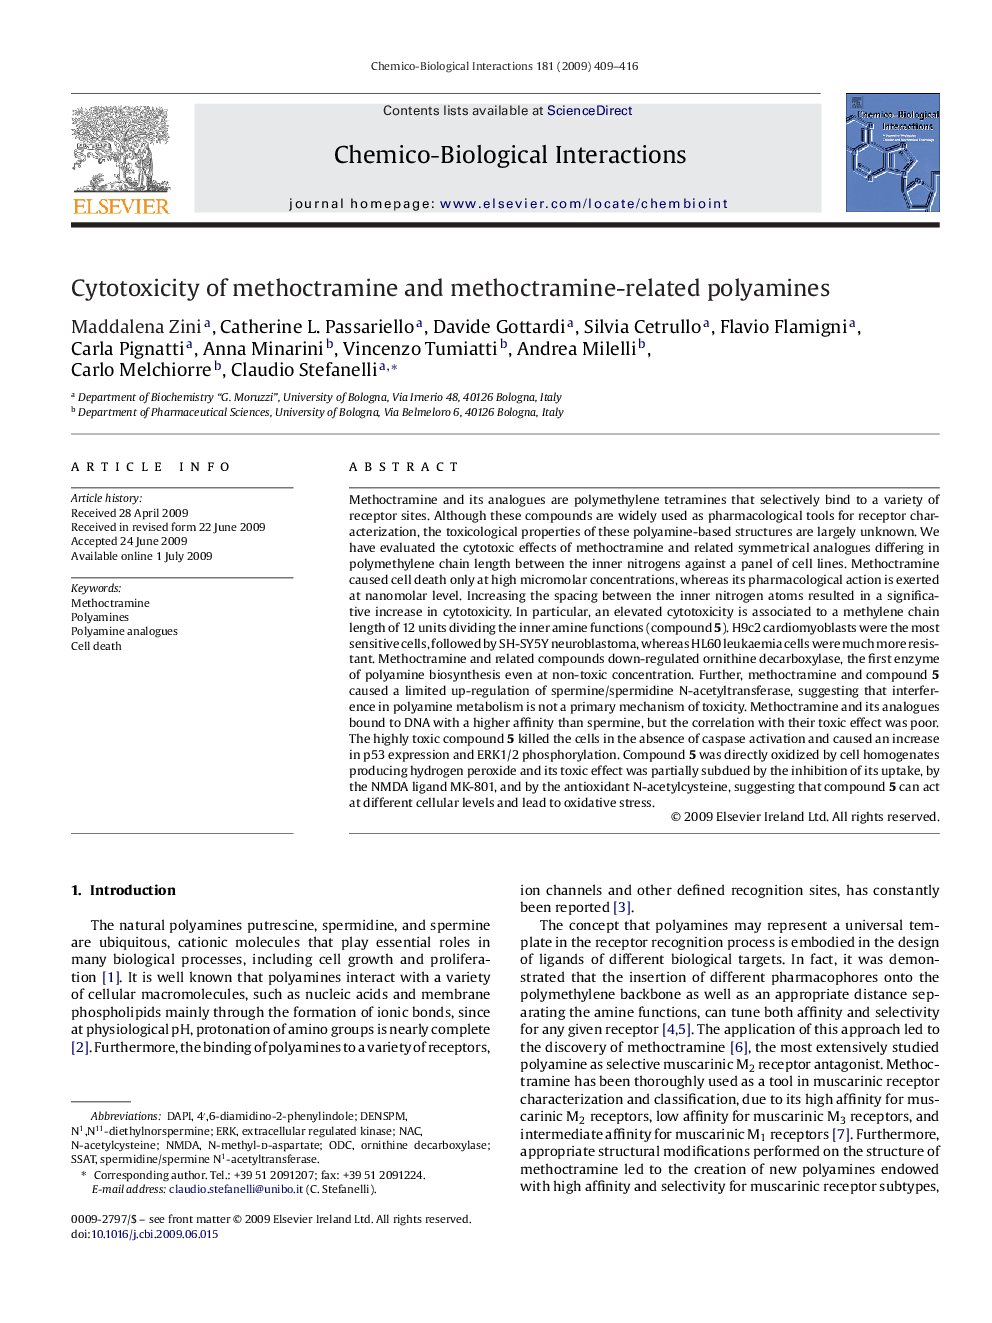 Cytotoxicity of methoctramine and methoctramine-related polyamines